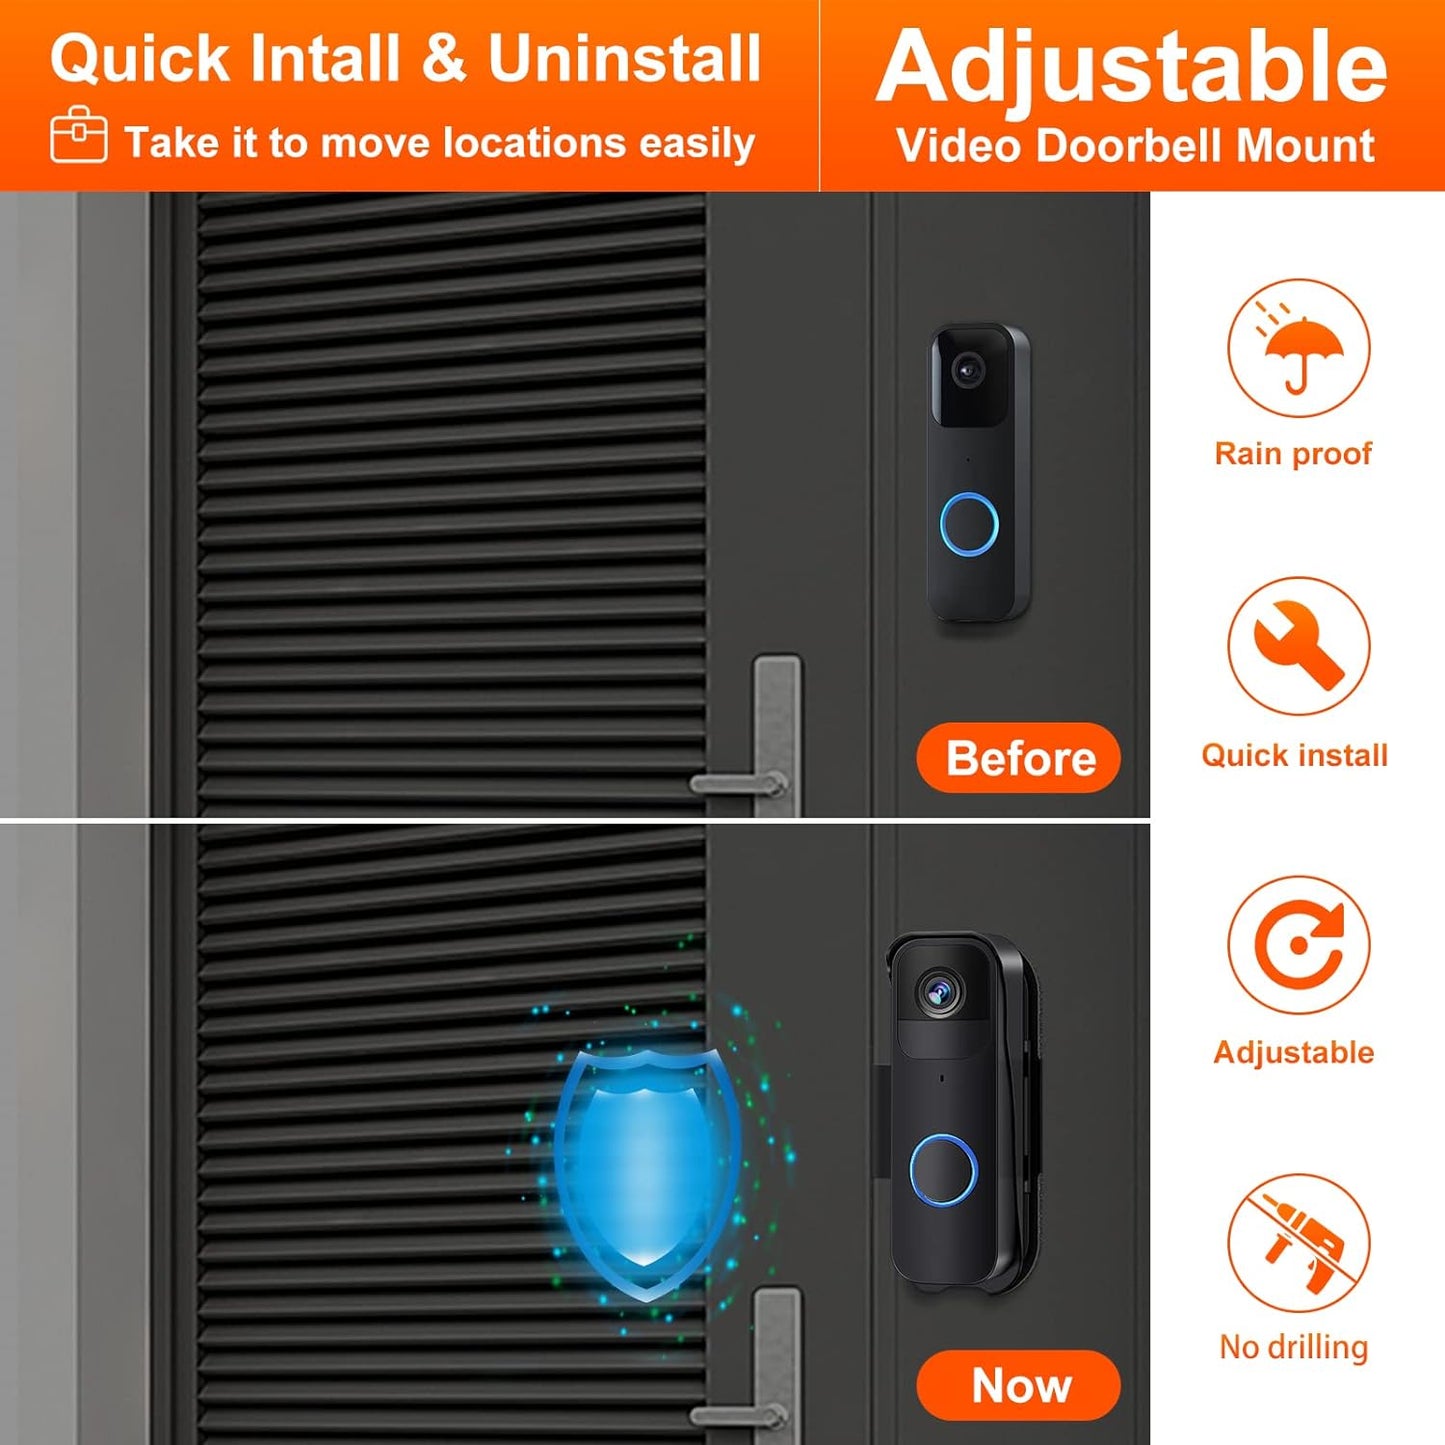 Blink Video Doorbell Mount No-Drill Adjustable Mounting Bracket